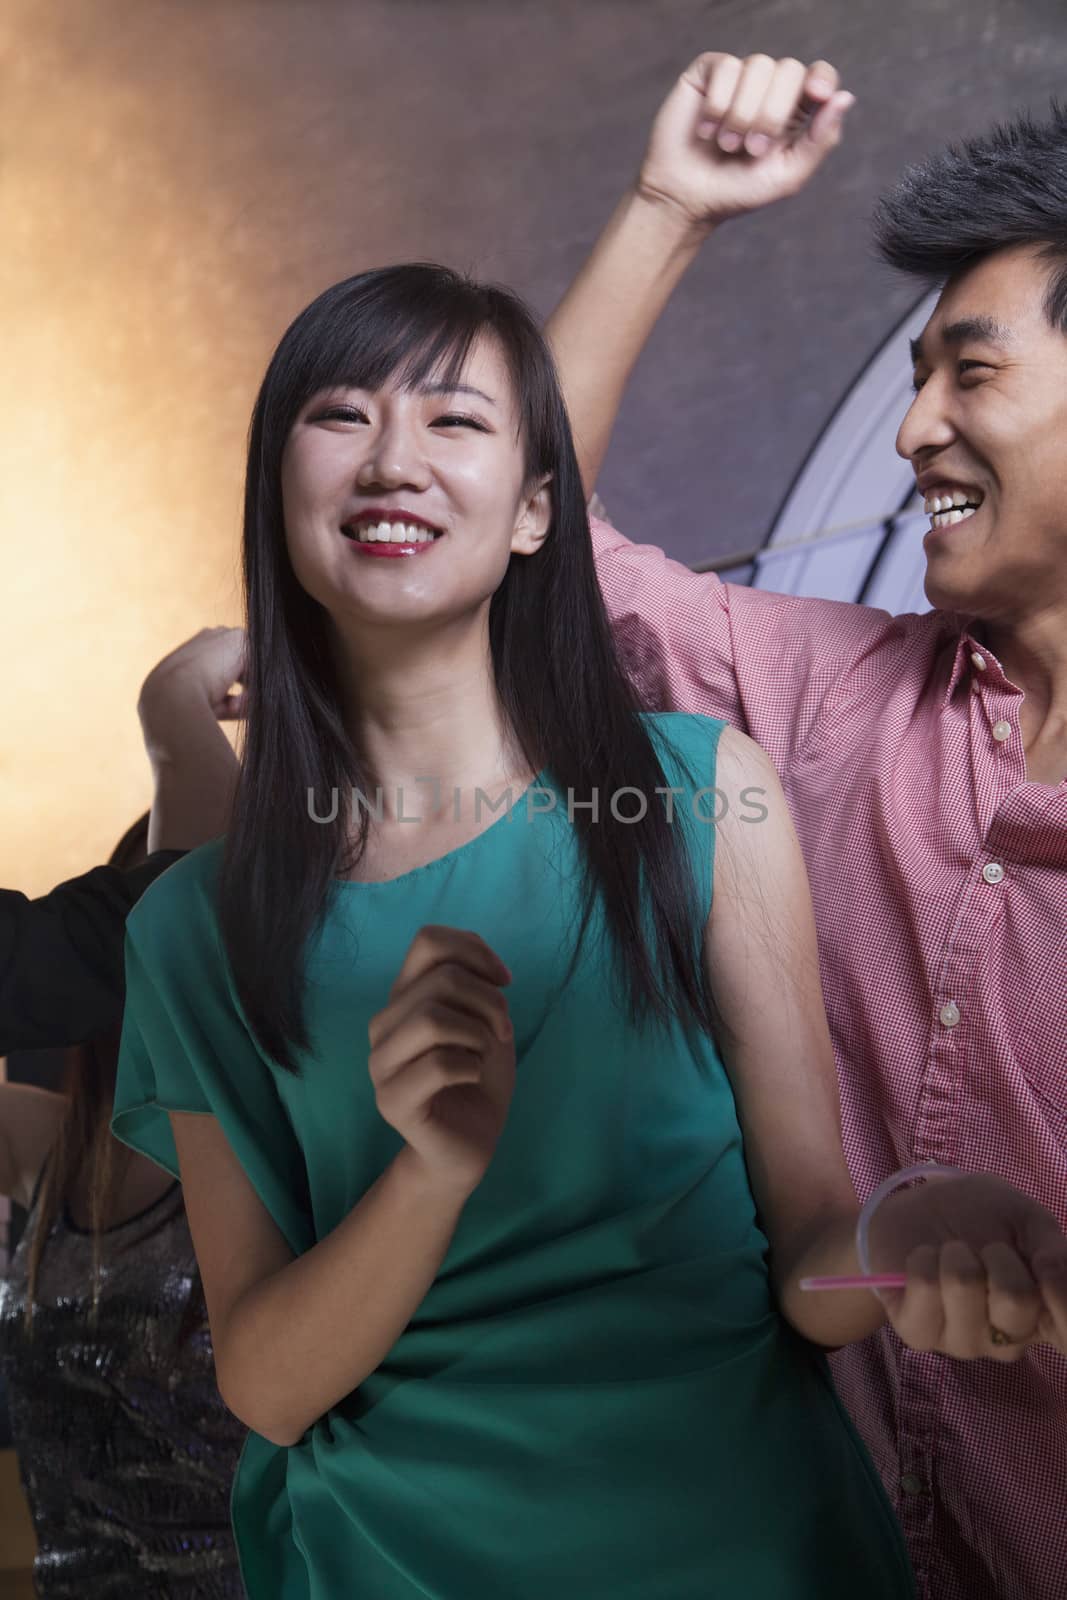 A young woman dancing with friends in a nightclub by XiXinXing